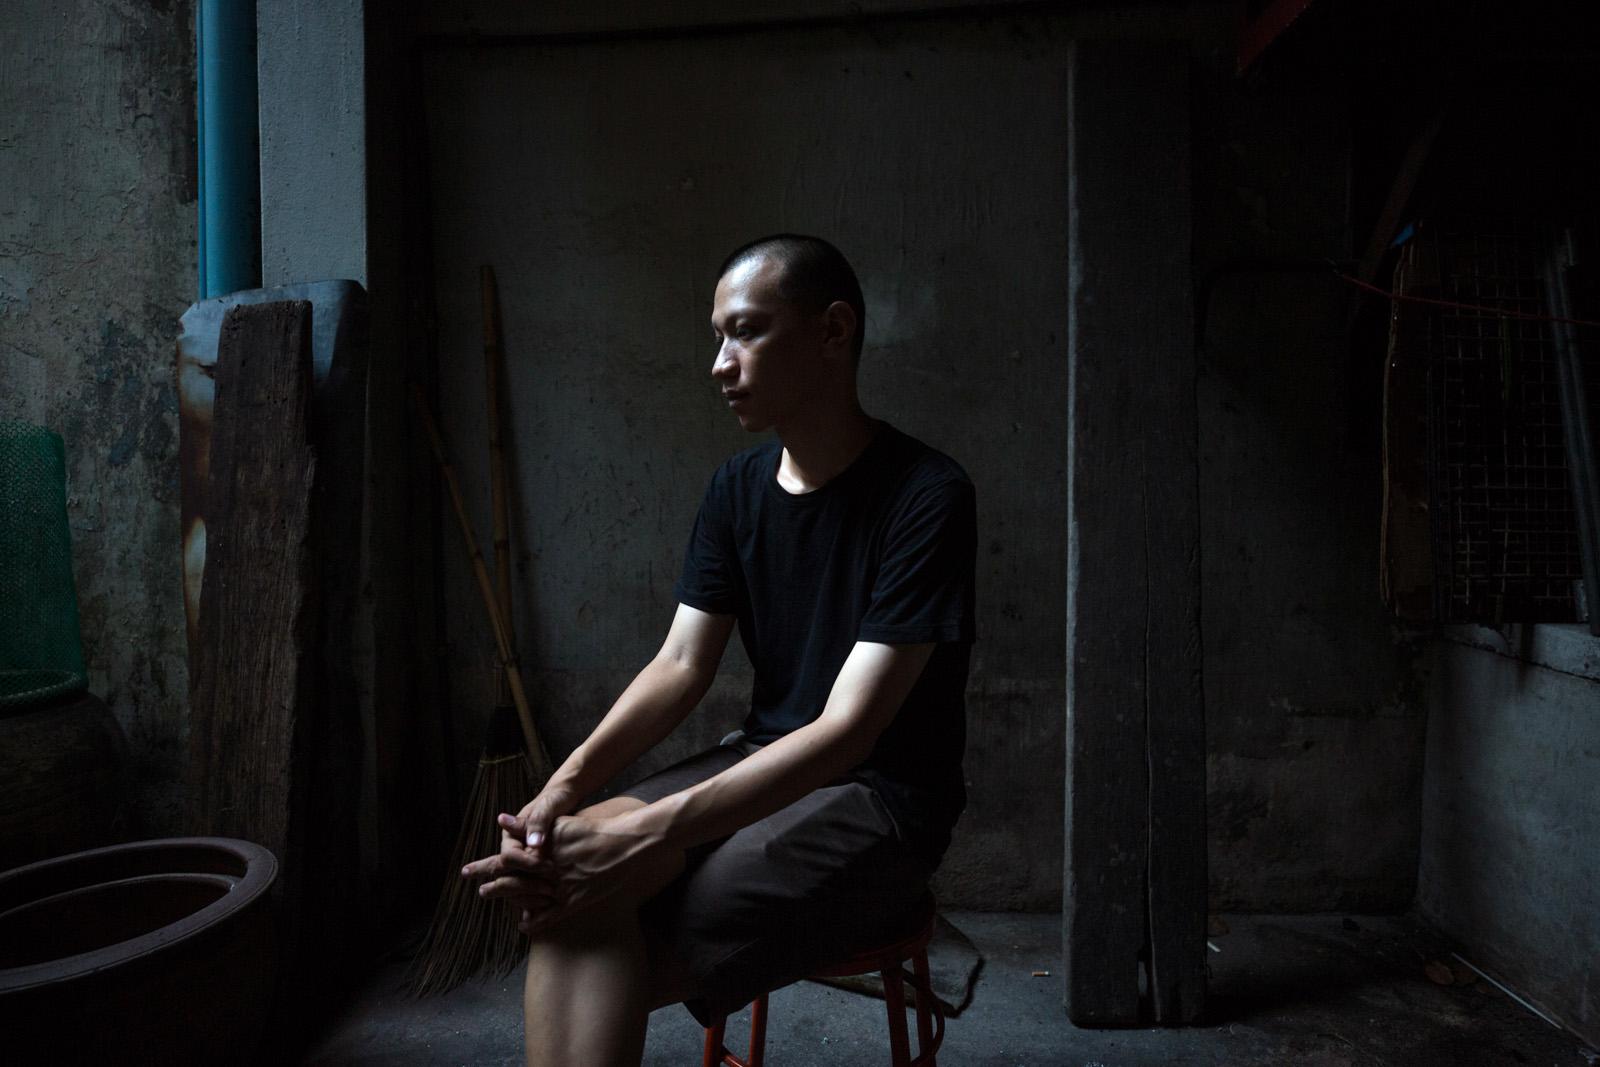 SOUTHEAST ASIA'S DENGUE EPIDEMIC - Jaturang Wongjiragorn, 28, sits in the dark alleyway...